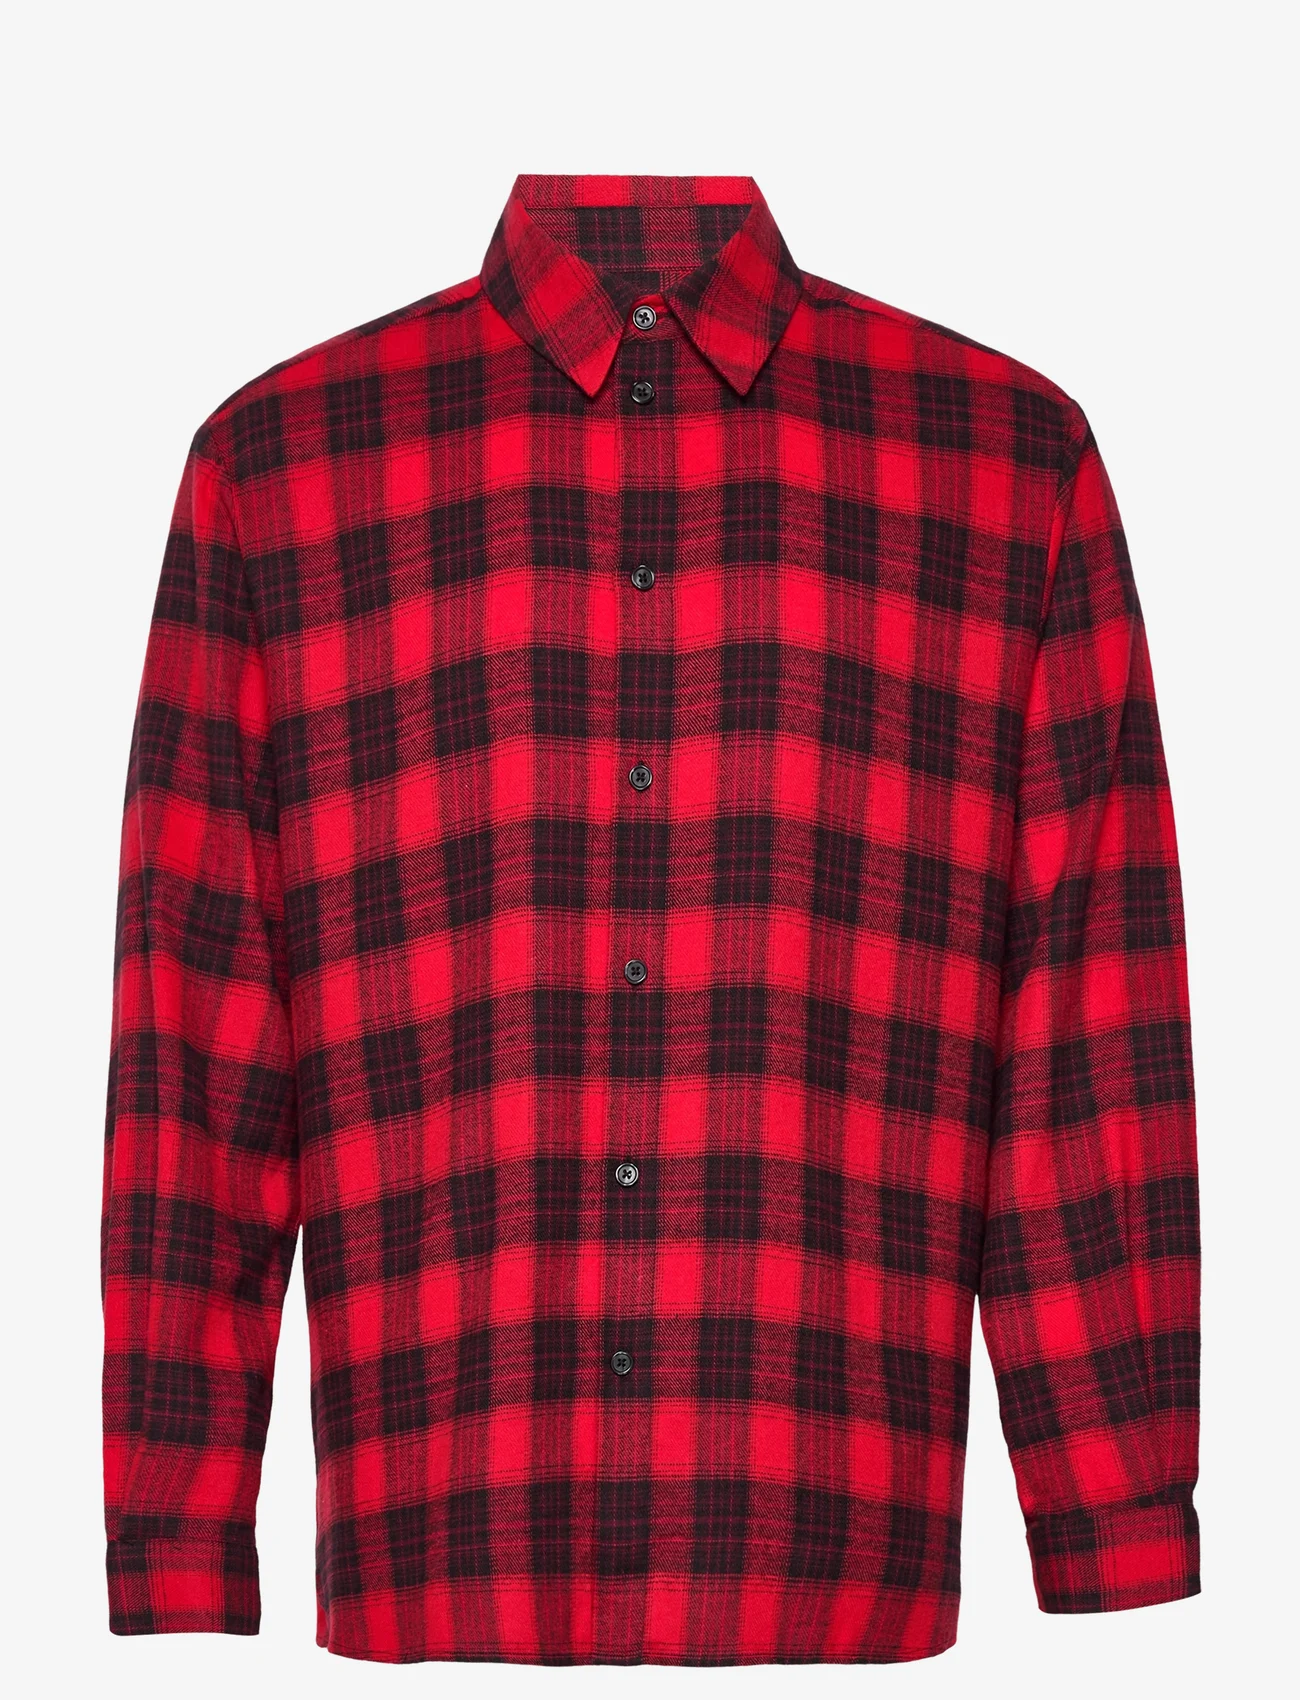 HOLZWEILER - Elja Red Check Shirt - languoti marškiniai - red - 0